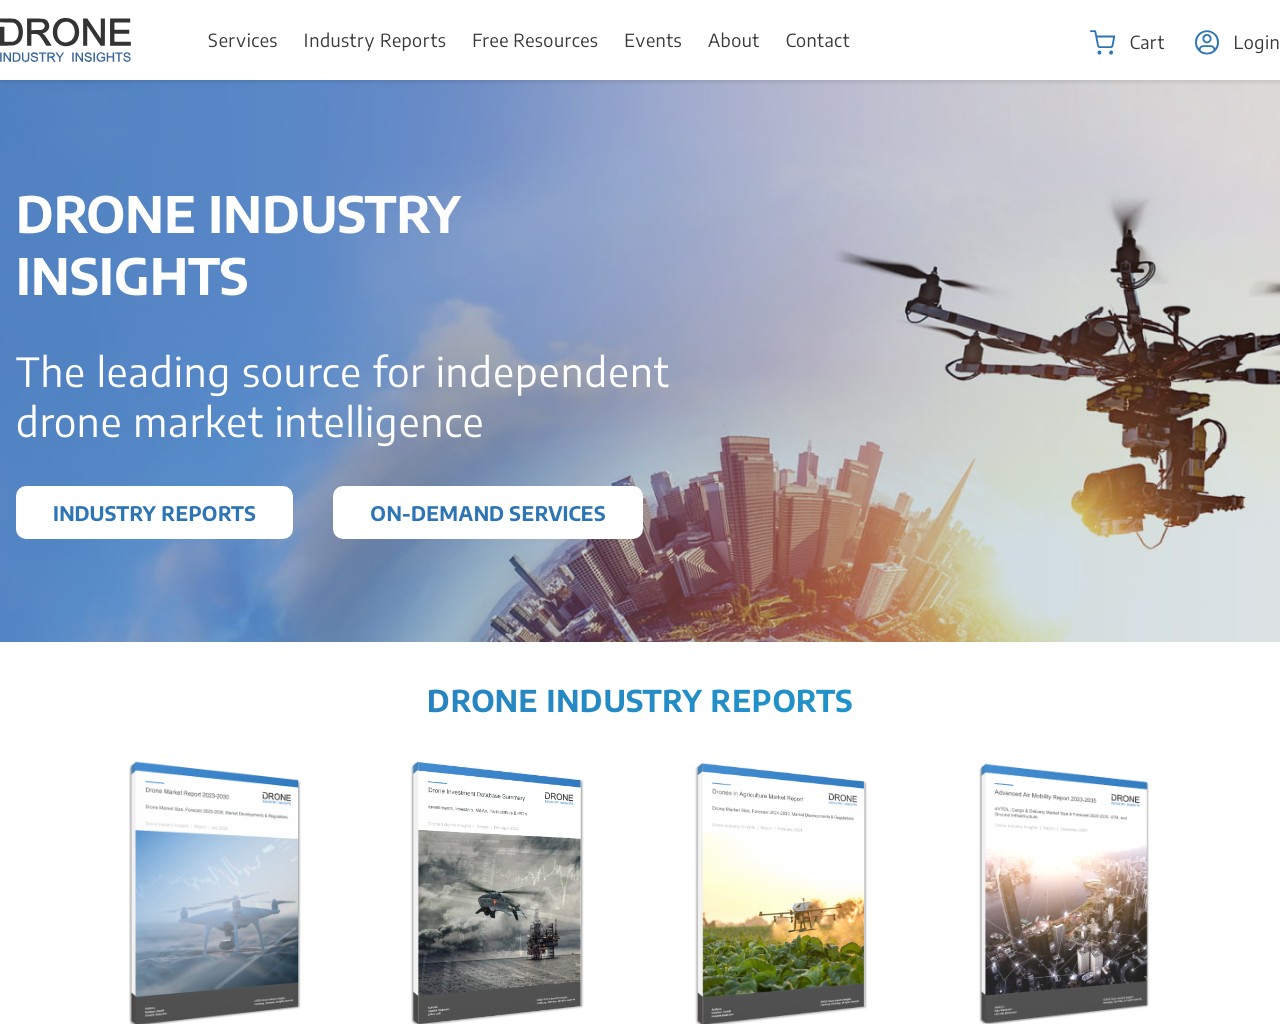 Drone Industry Insights - сайт, посвященный новостям, исследованиям и тенденциям в области дронов